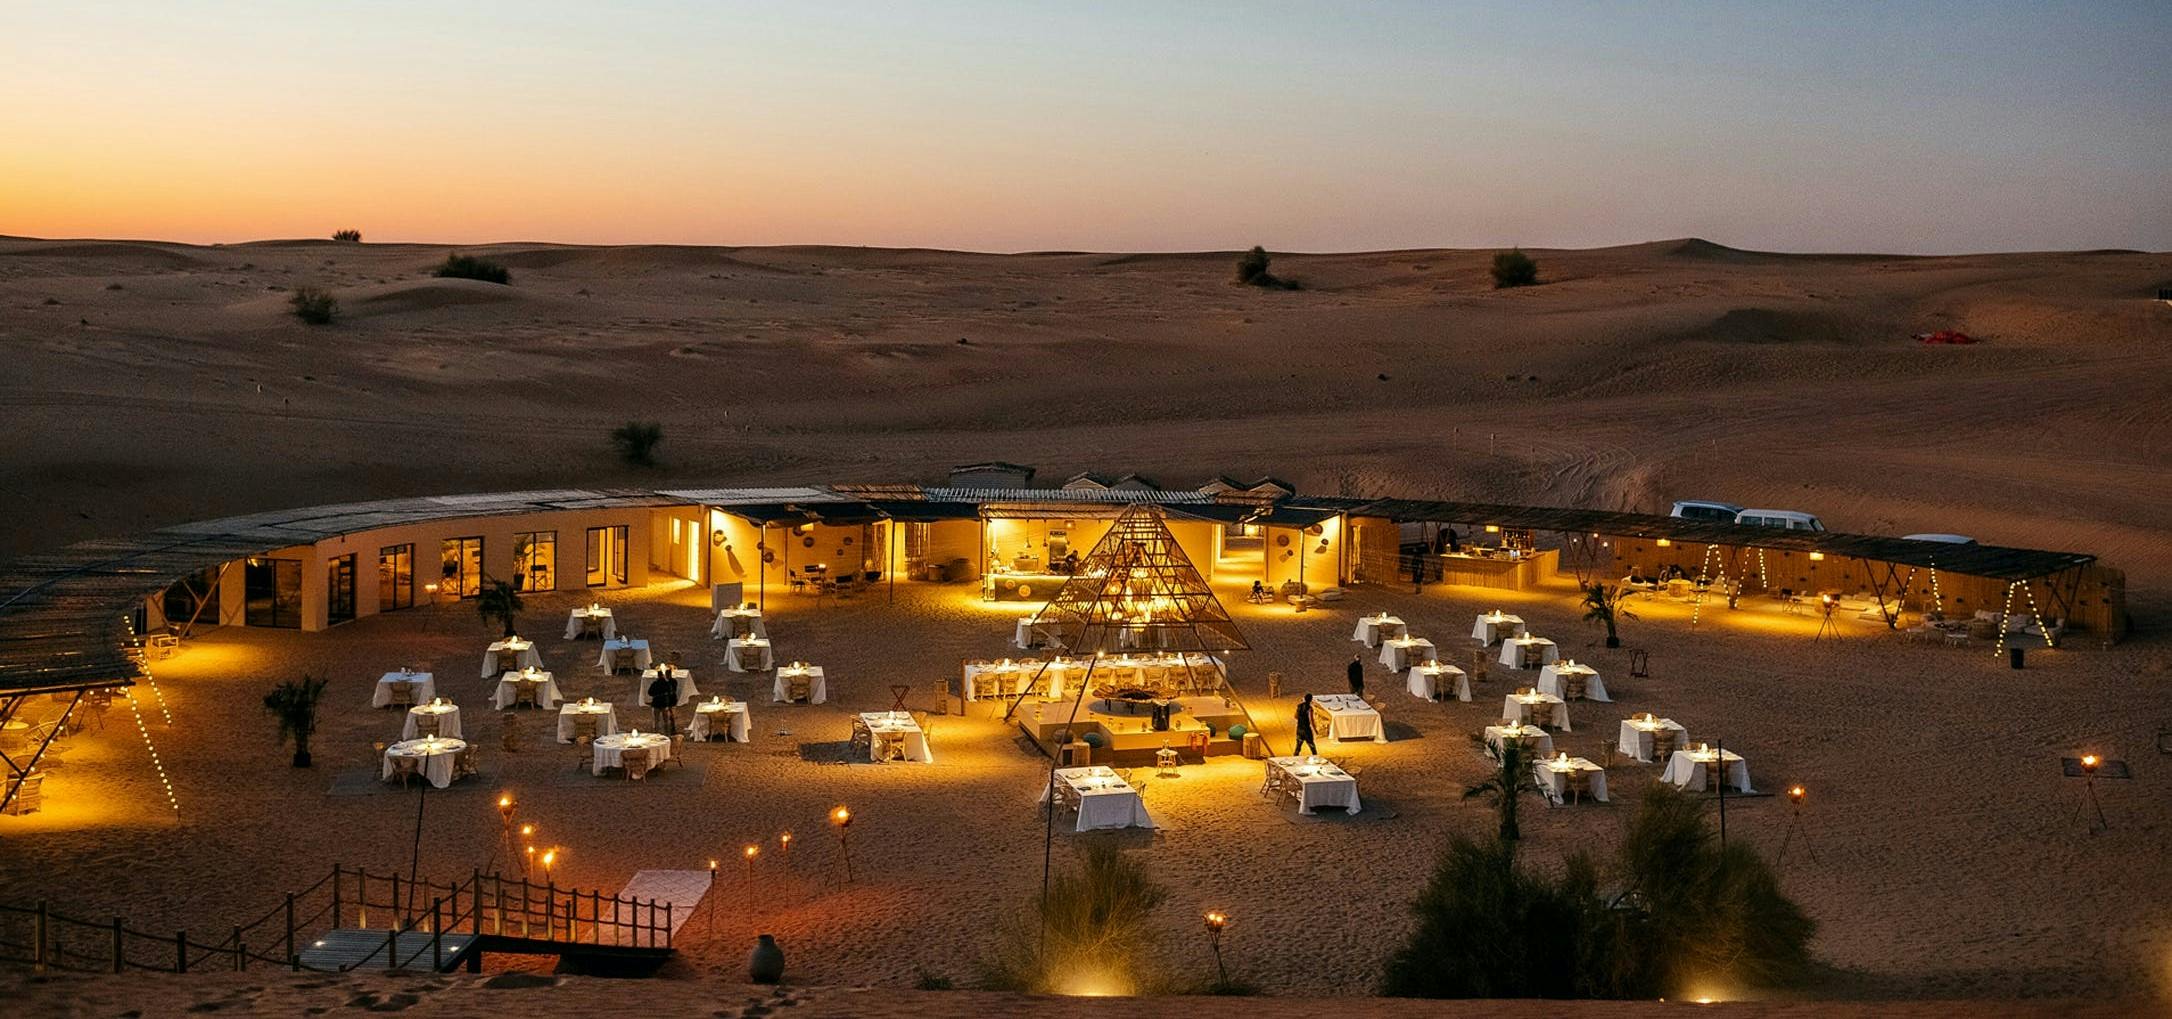 Sonara camp desert experience and dinner